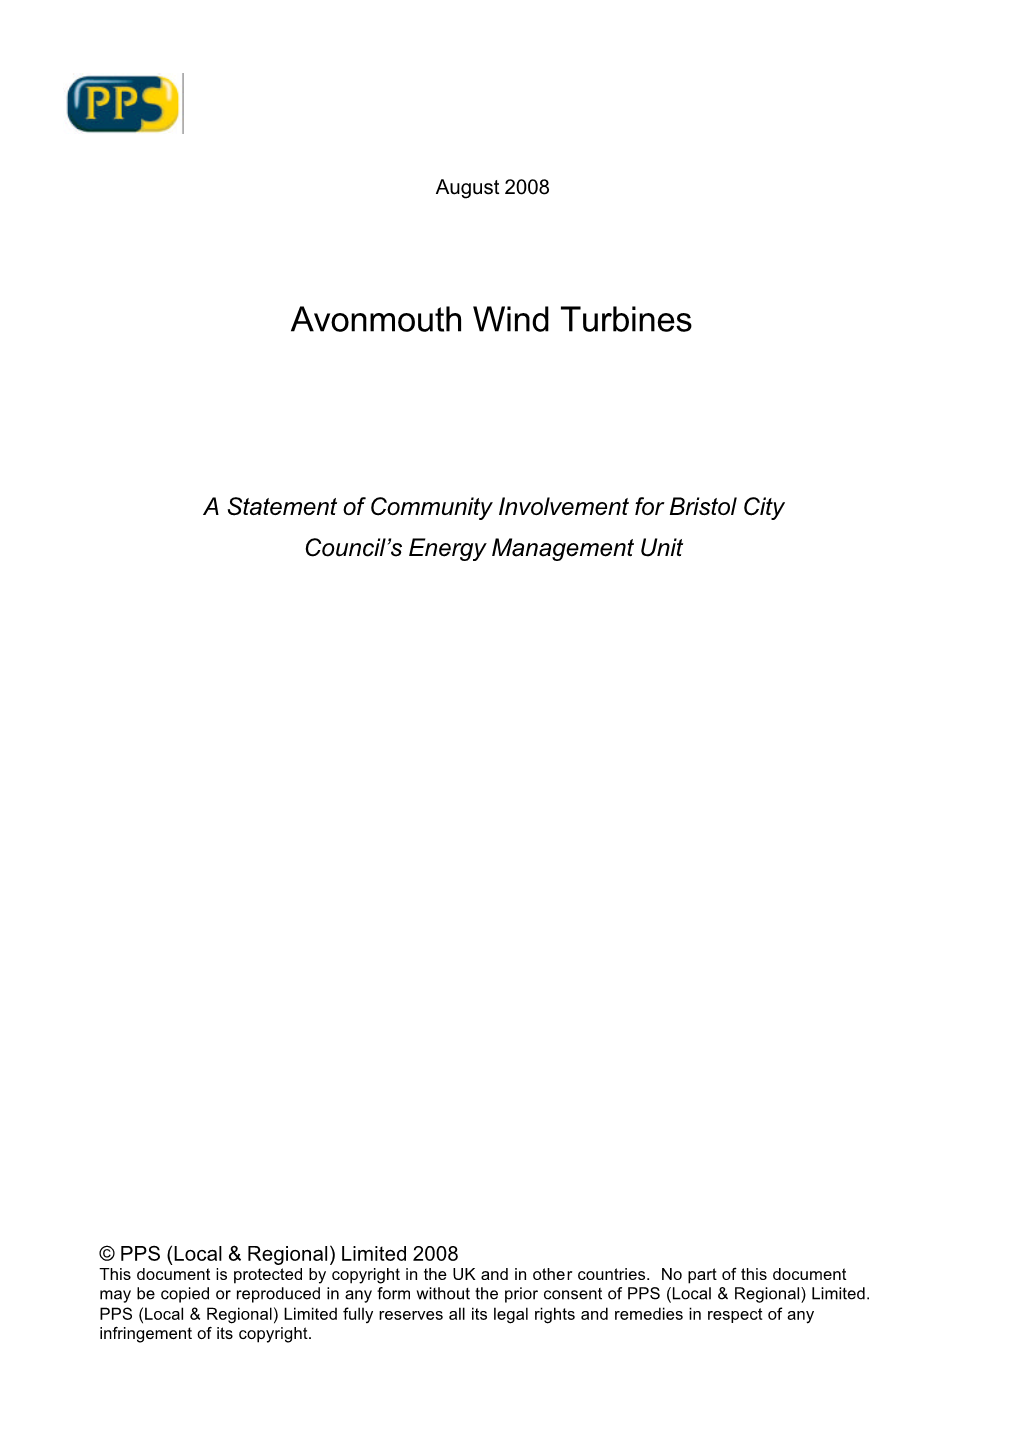 Avonmouth Wind Turbines